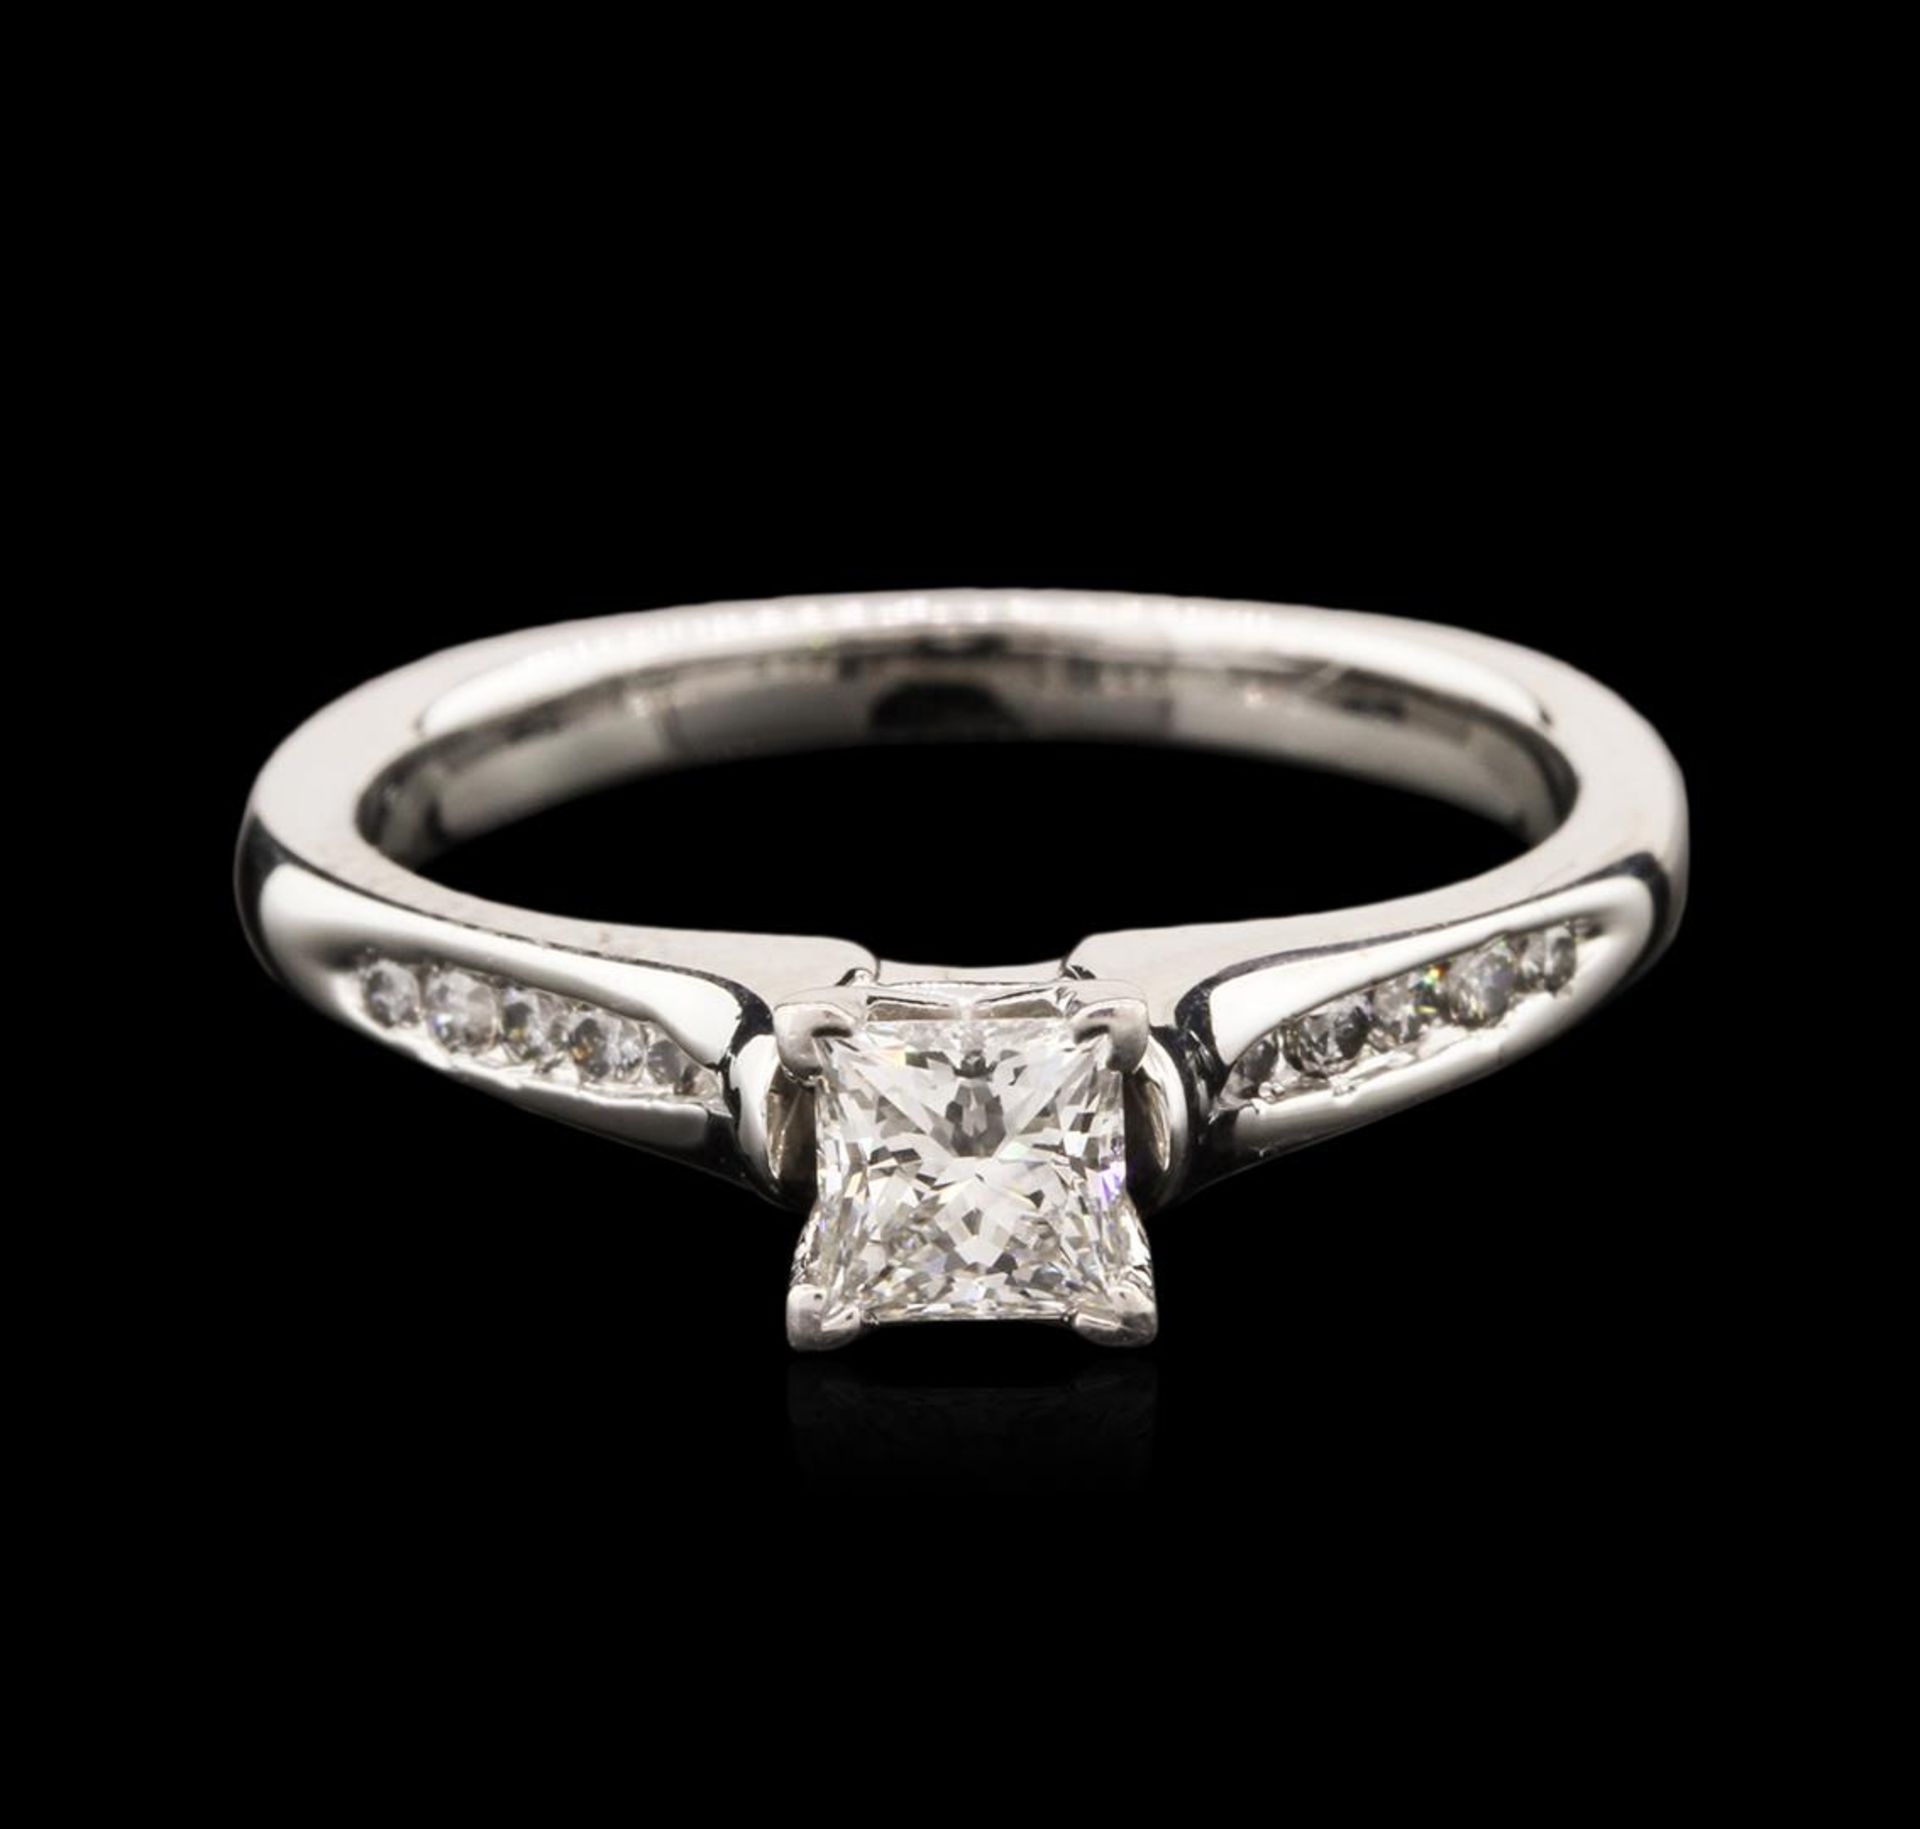 14KT White Gold 0.66 ctw Diamond Ring - Image 2 of 4